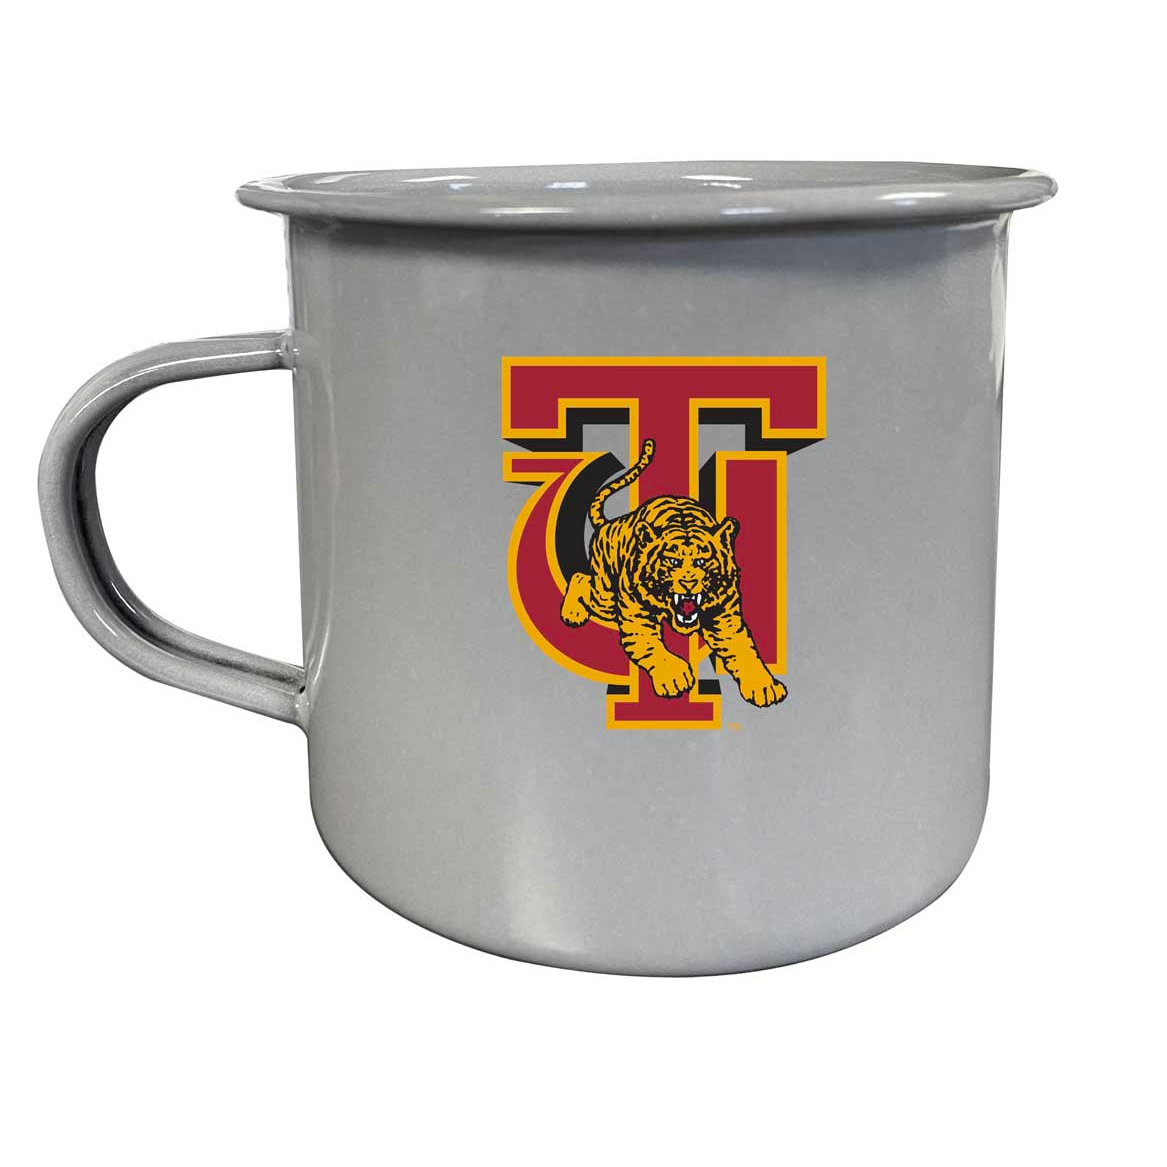 Tuskegee University Tin Camper Coffee Mug - Choose Your Color - Navy